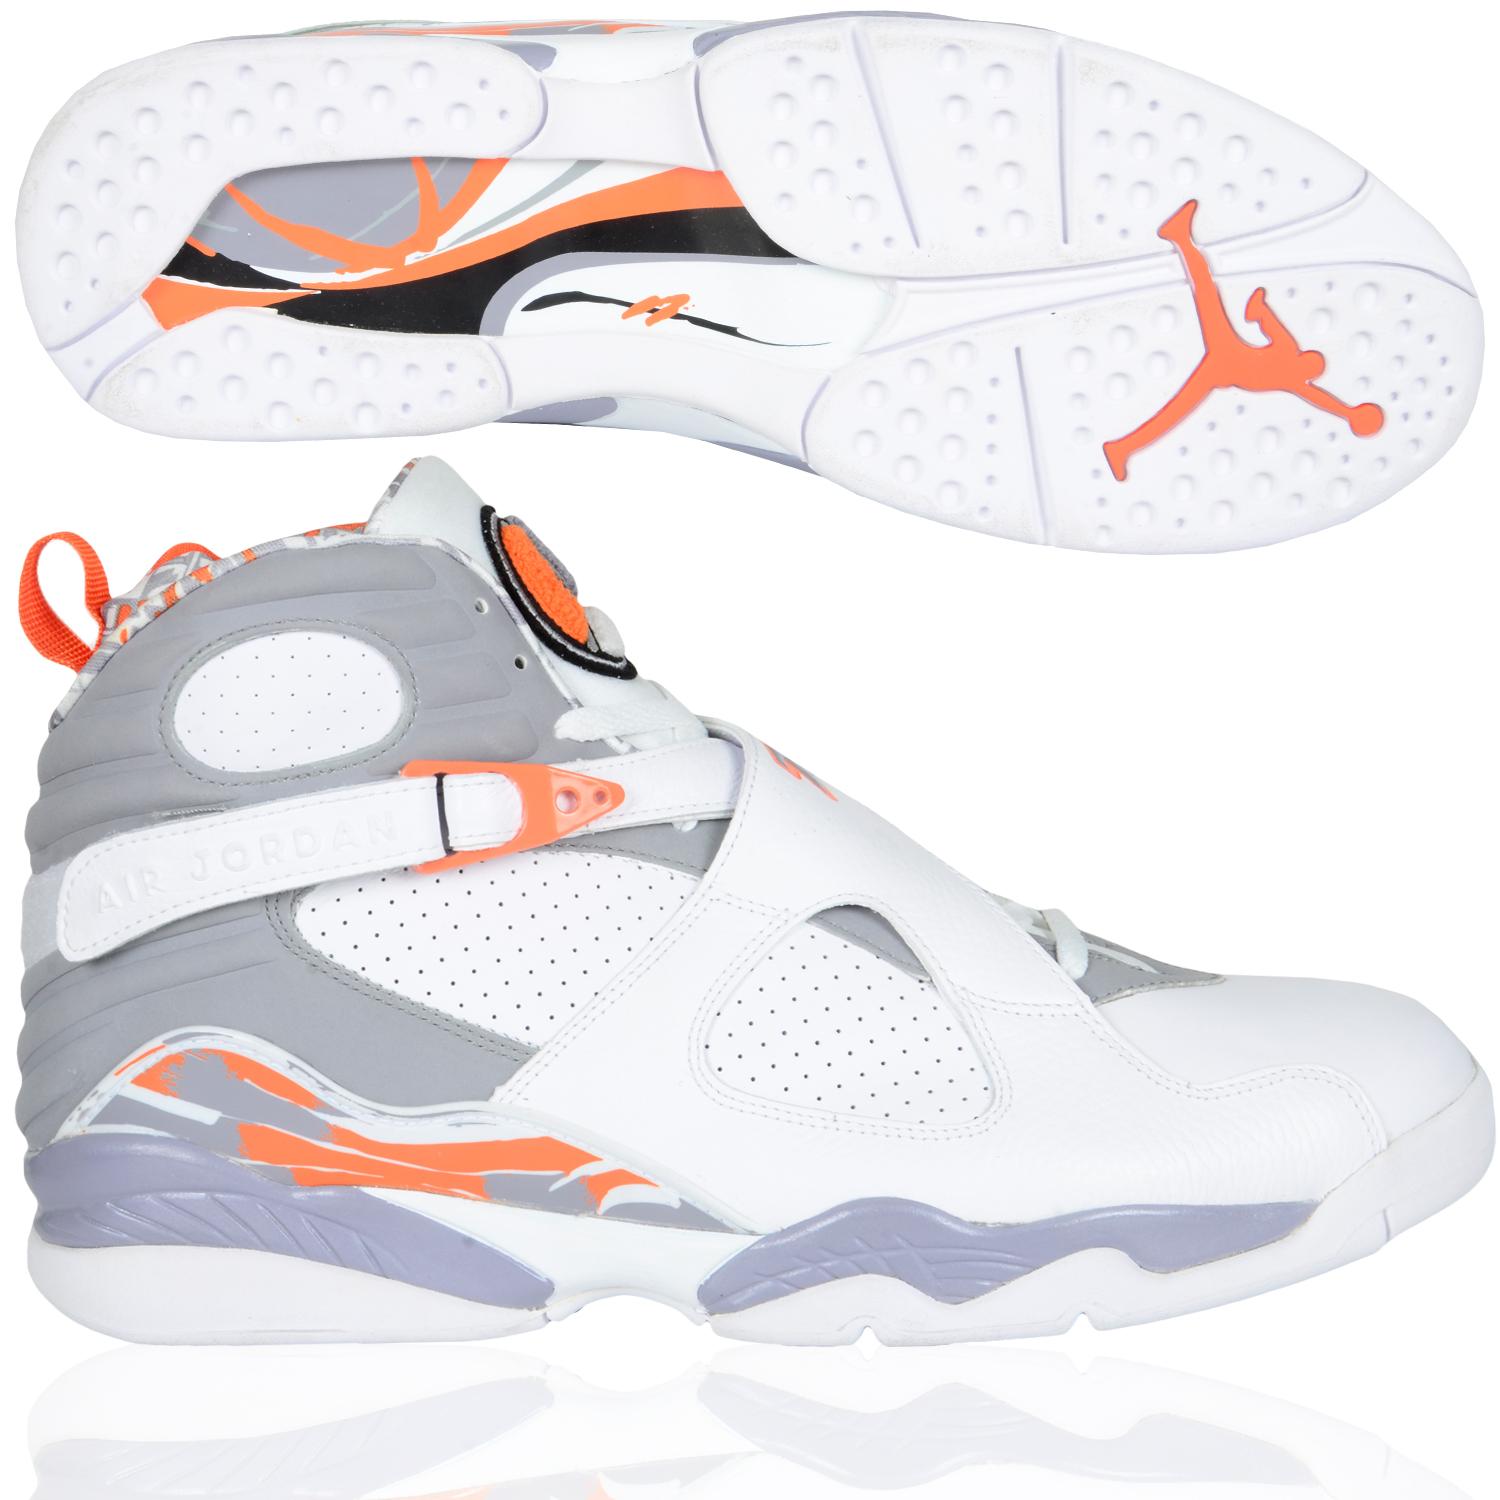 Foto Nike Shoe Air Jordan 8 Retro Zapatillas De Baloncesto Blanco Naranja  foto 276851